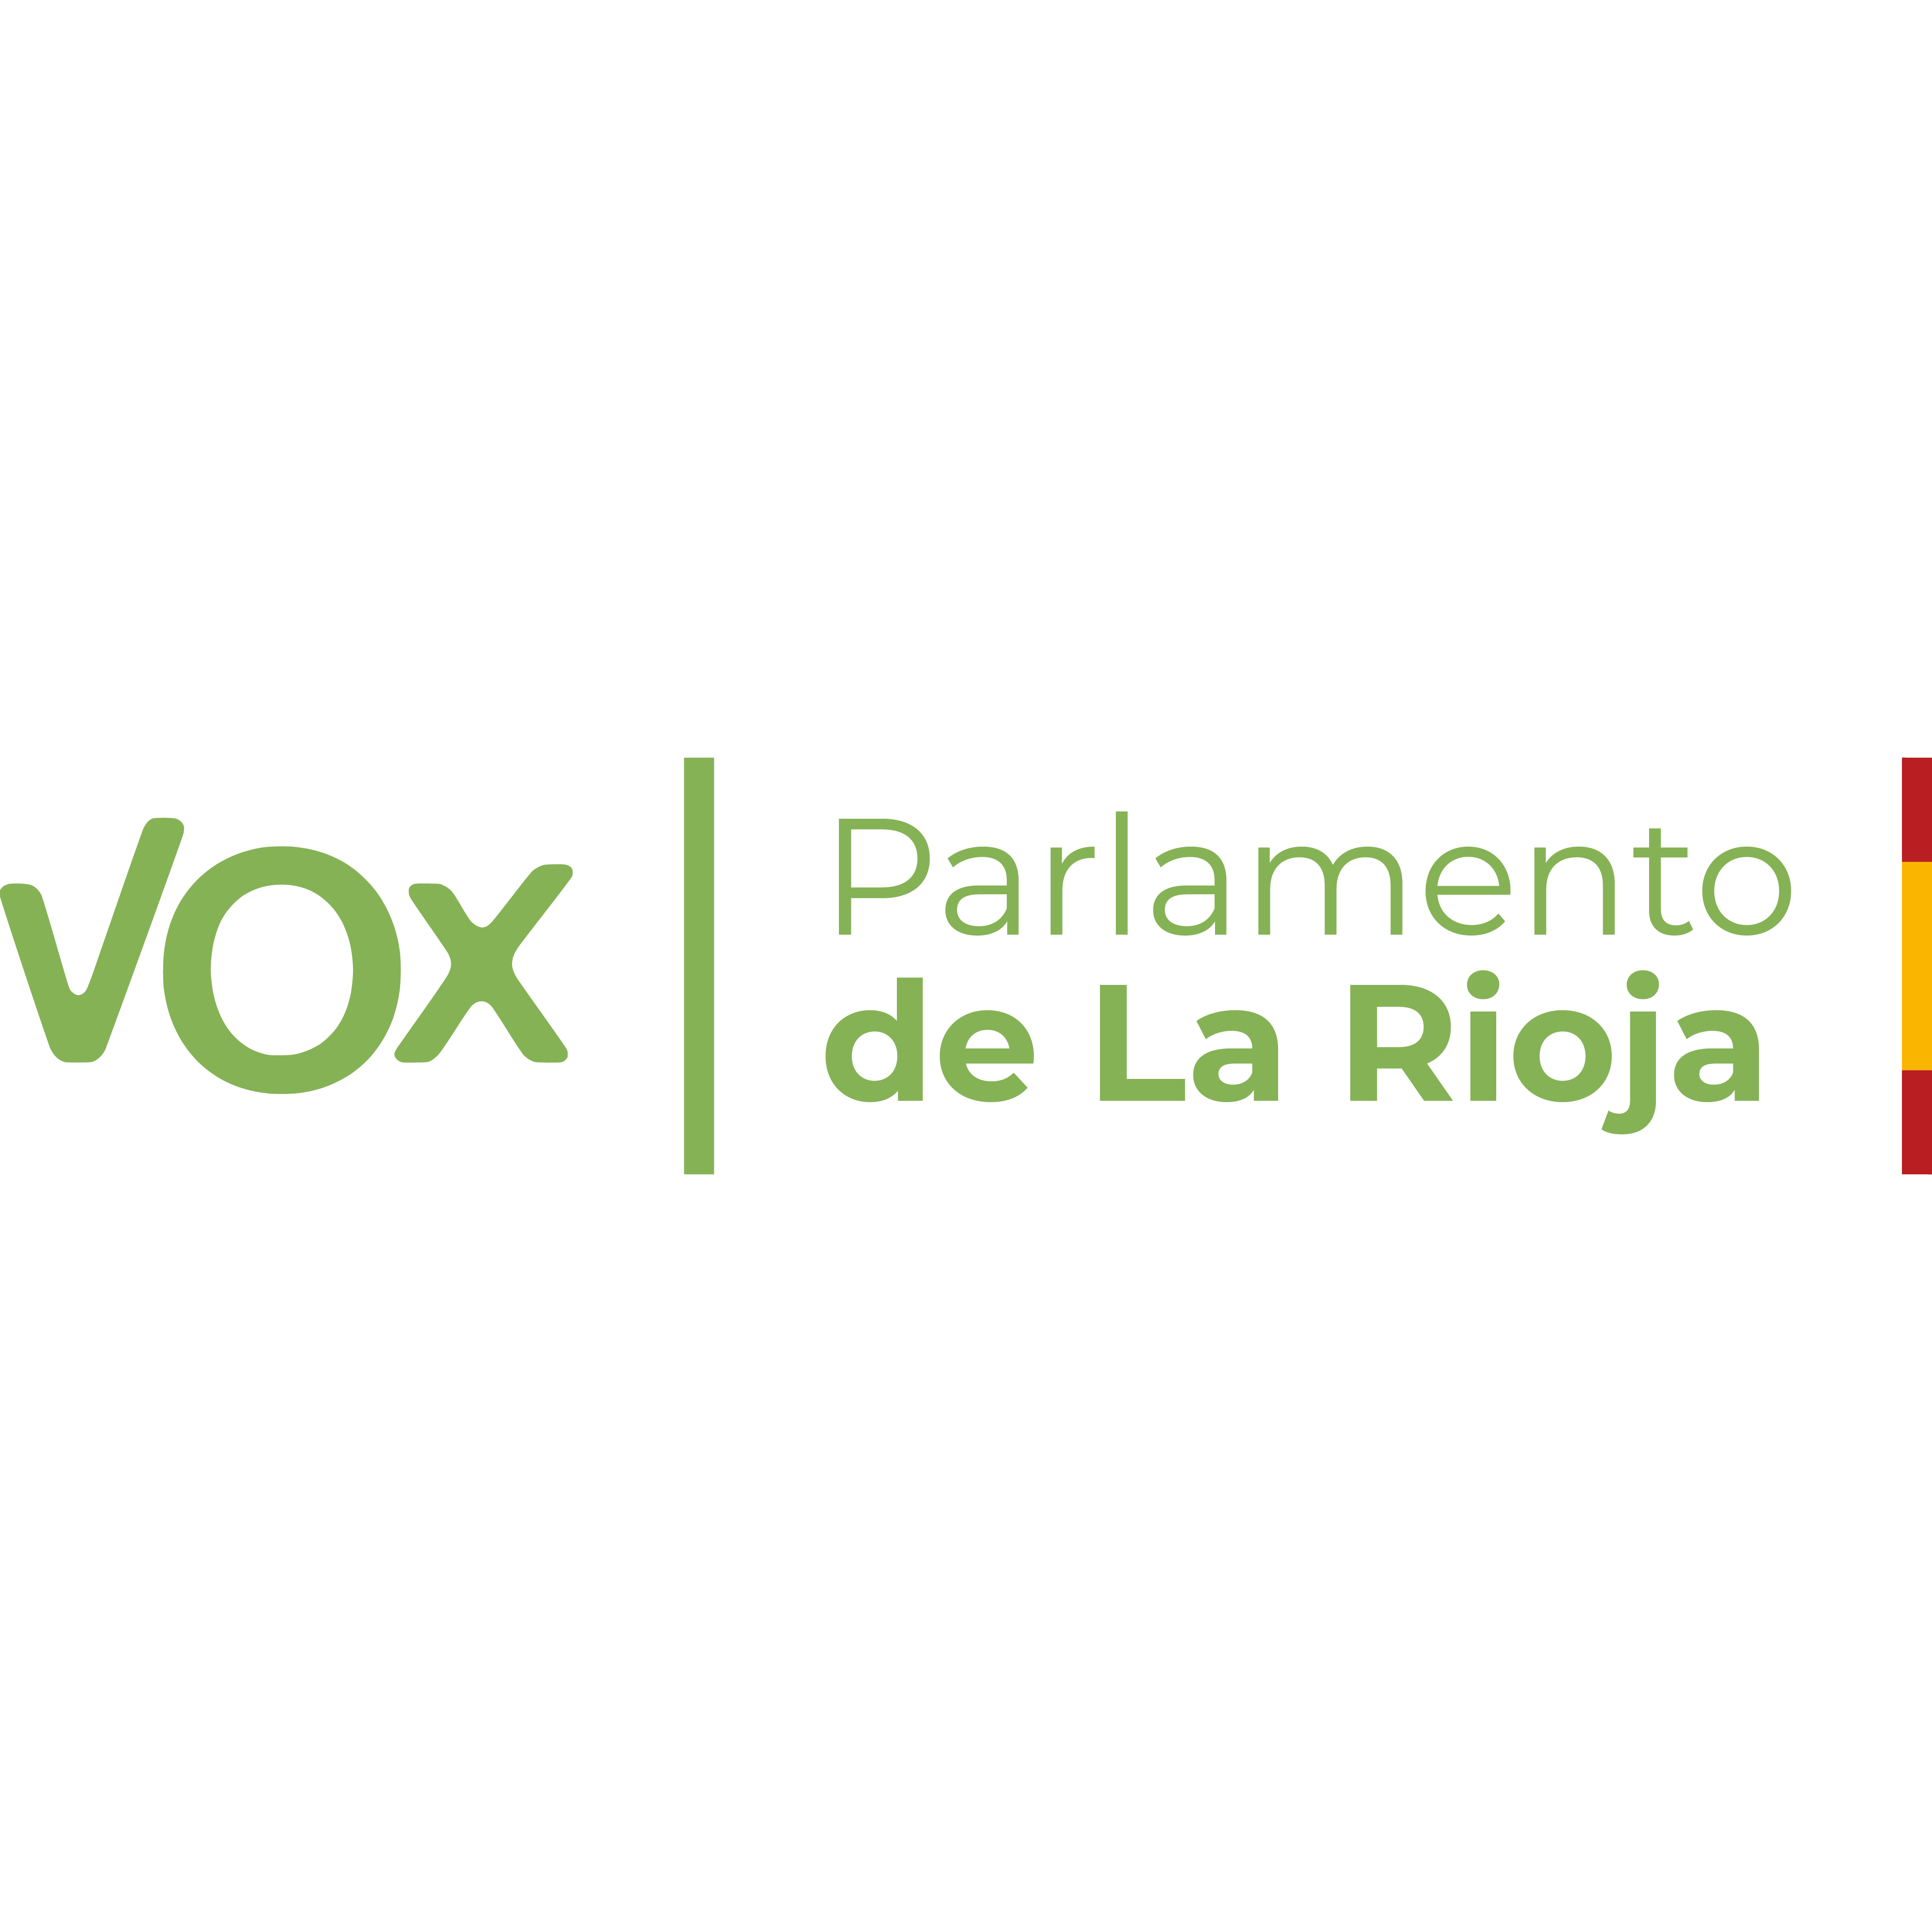 Parlamento de la Rioja